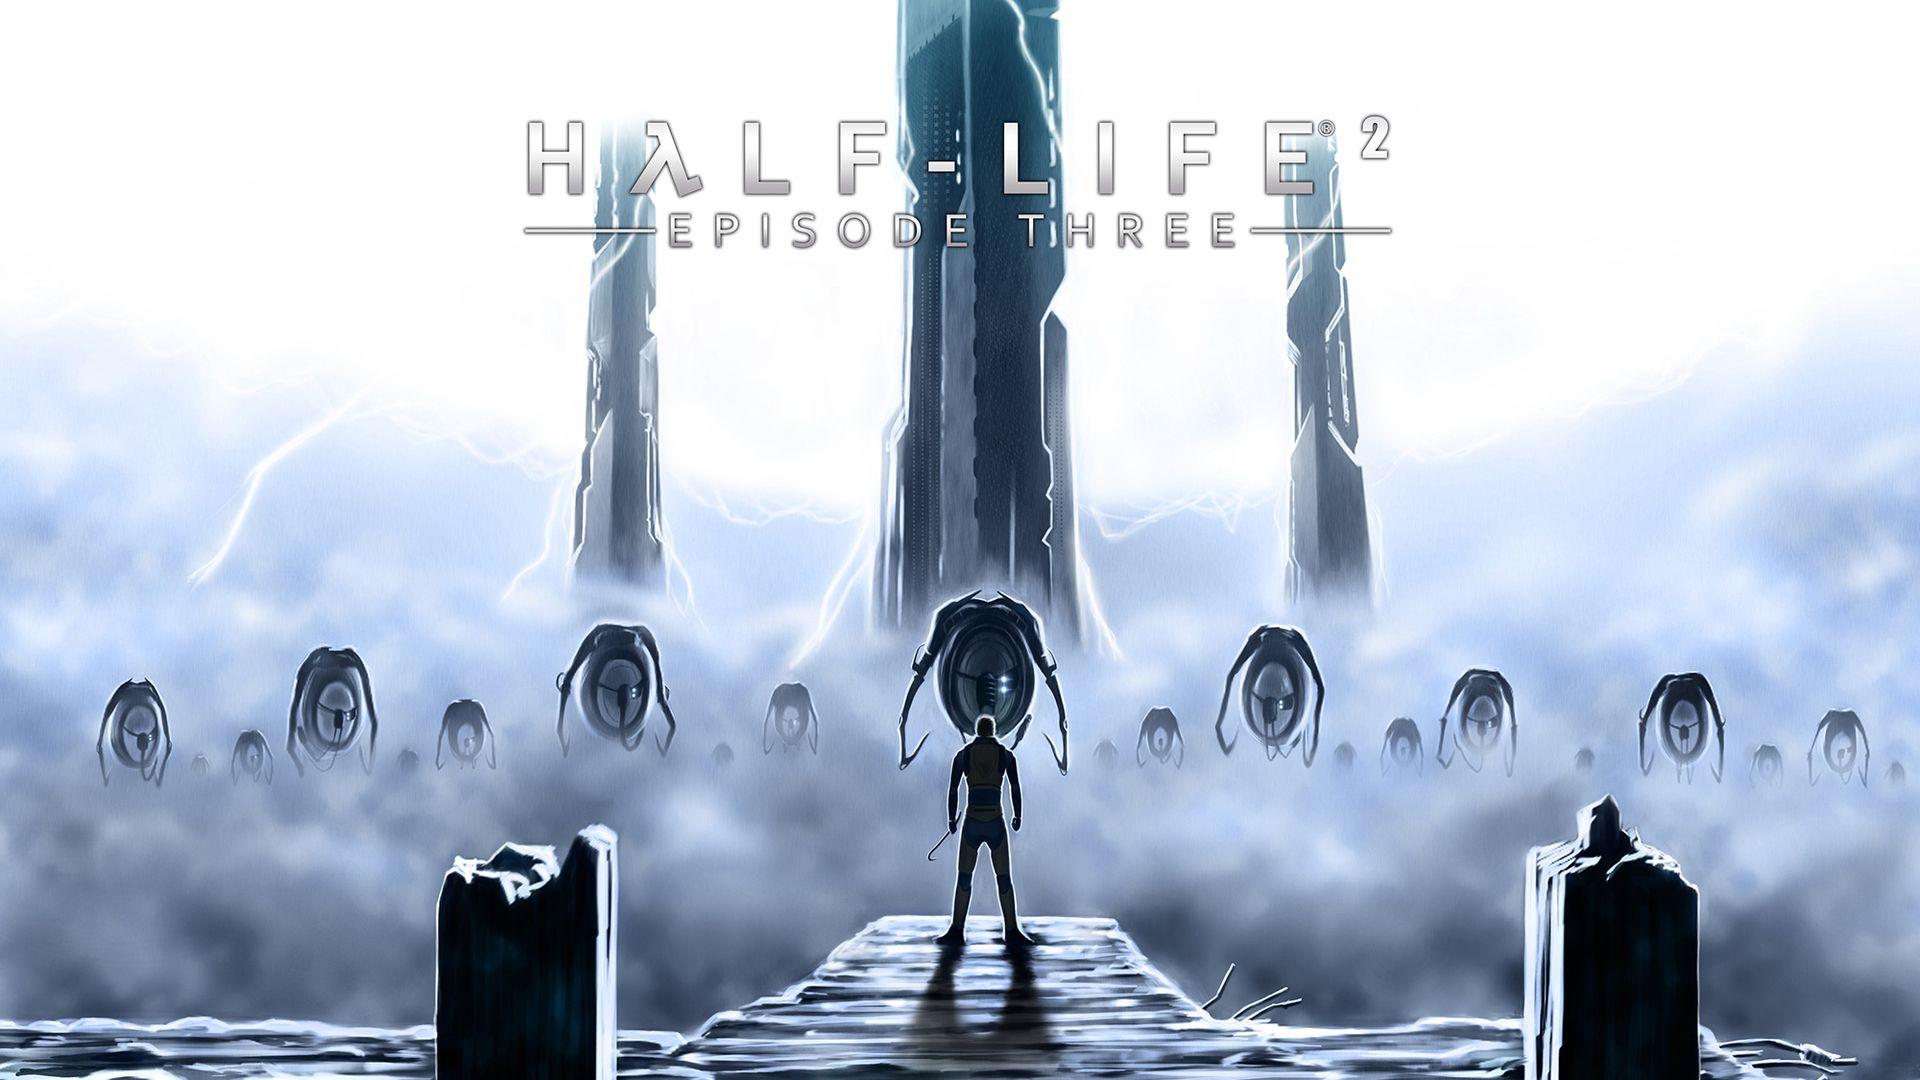 Half Life 2 Wallpaper, Picture, Image